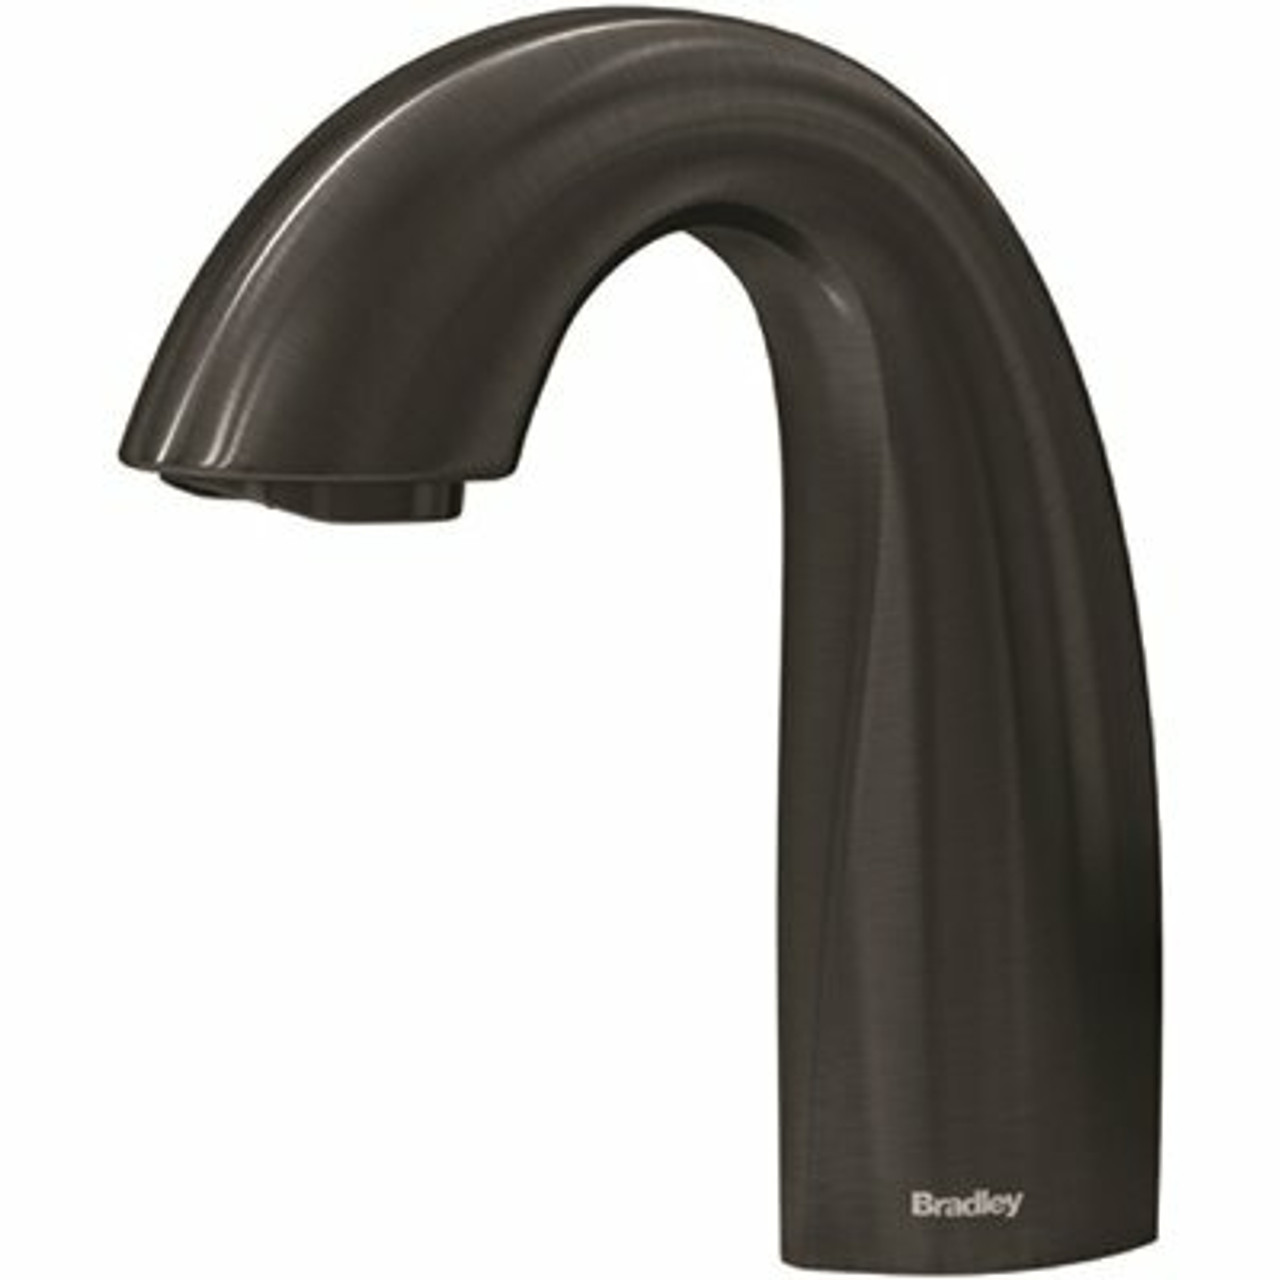 Bradley Crestt Verge Faucet In Brushed Black - 313831448